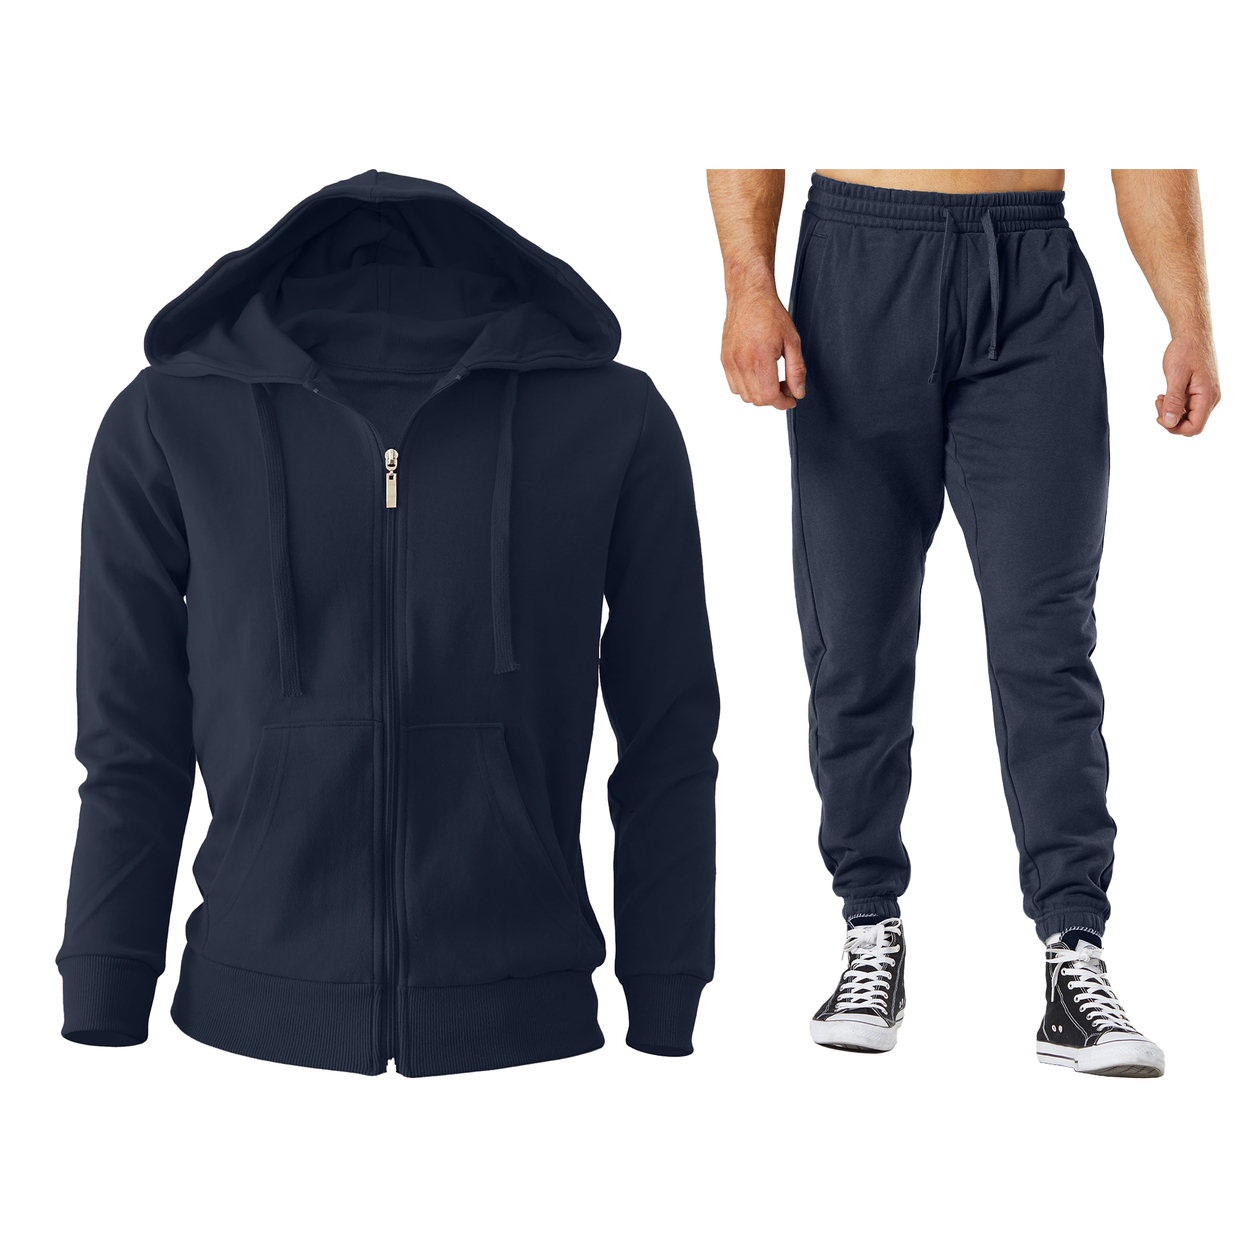 2/4-Piece: Men's Winter Warm Cozy Athletic Multi-Pockets BIG & TALL Sweatsuit Set - Charcoal, 2, Medium